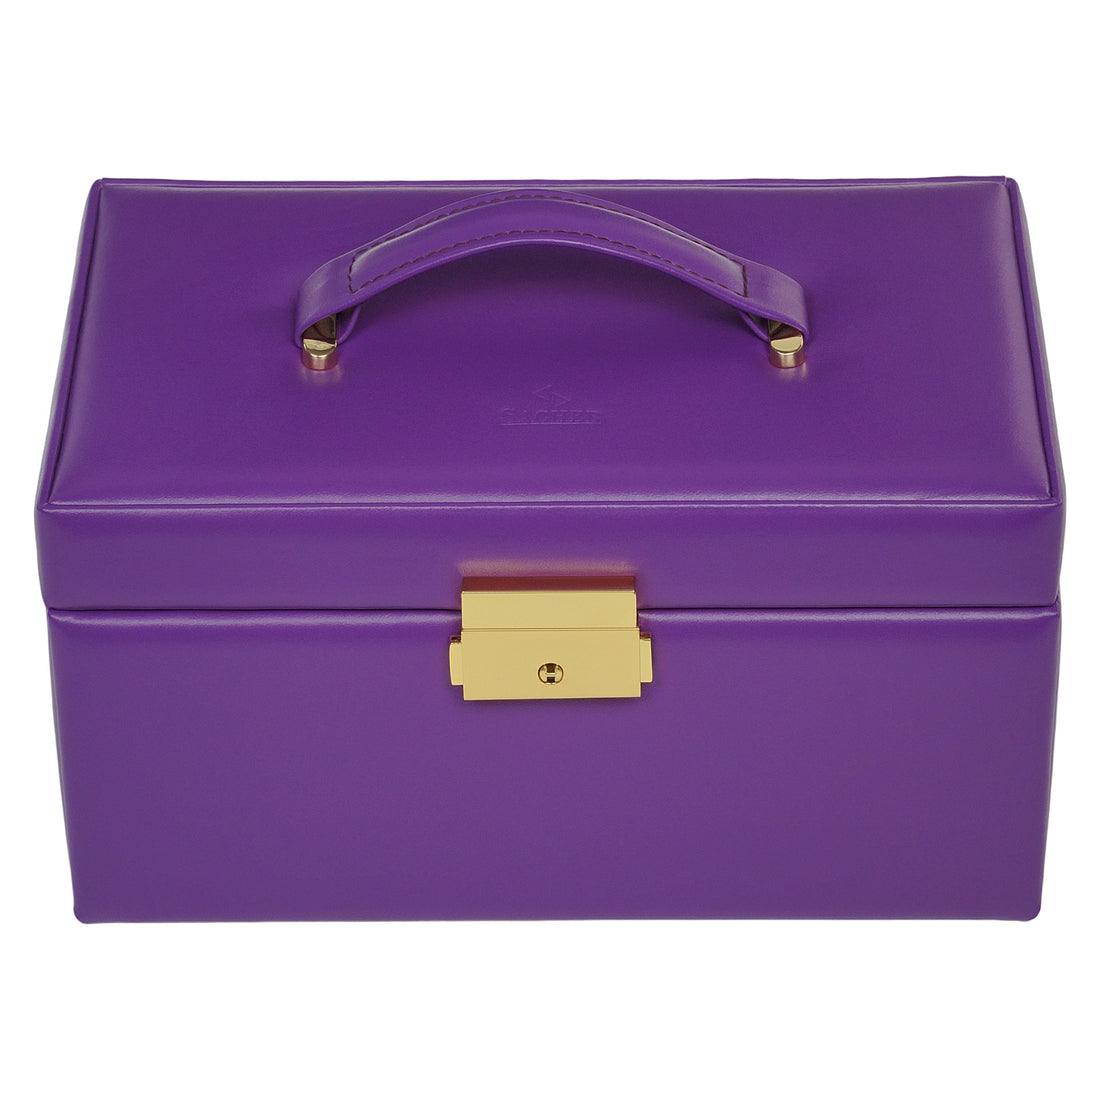 Caja de joyas Emma colisimo / violeta (cuero de vaca completo)